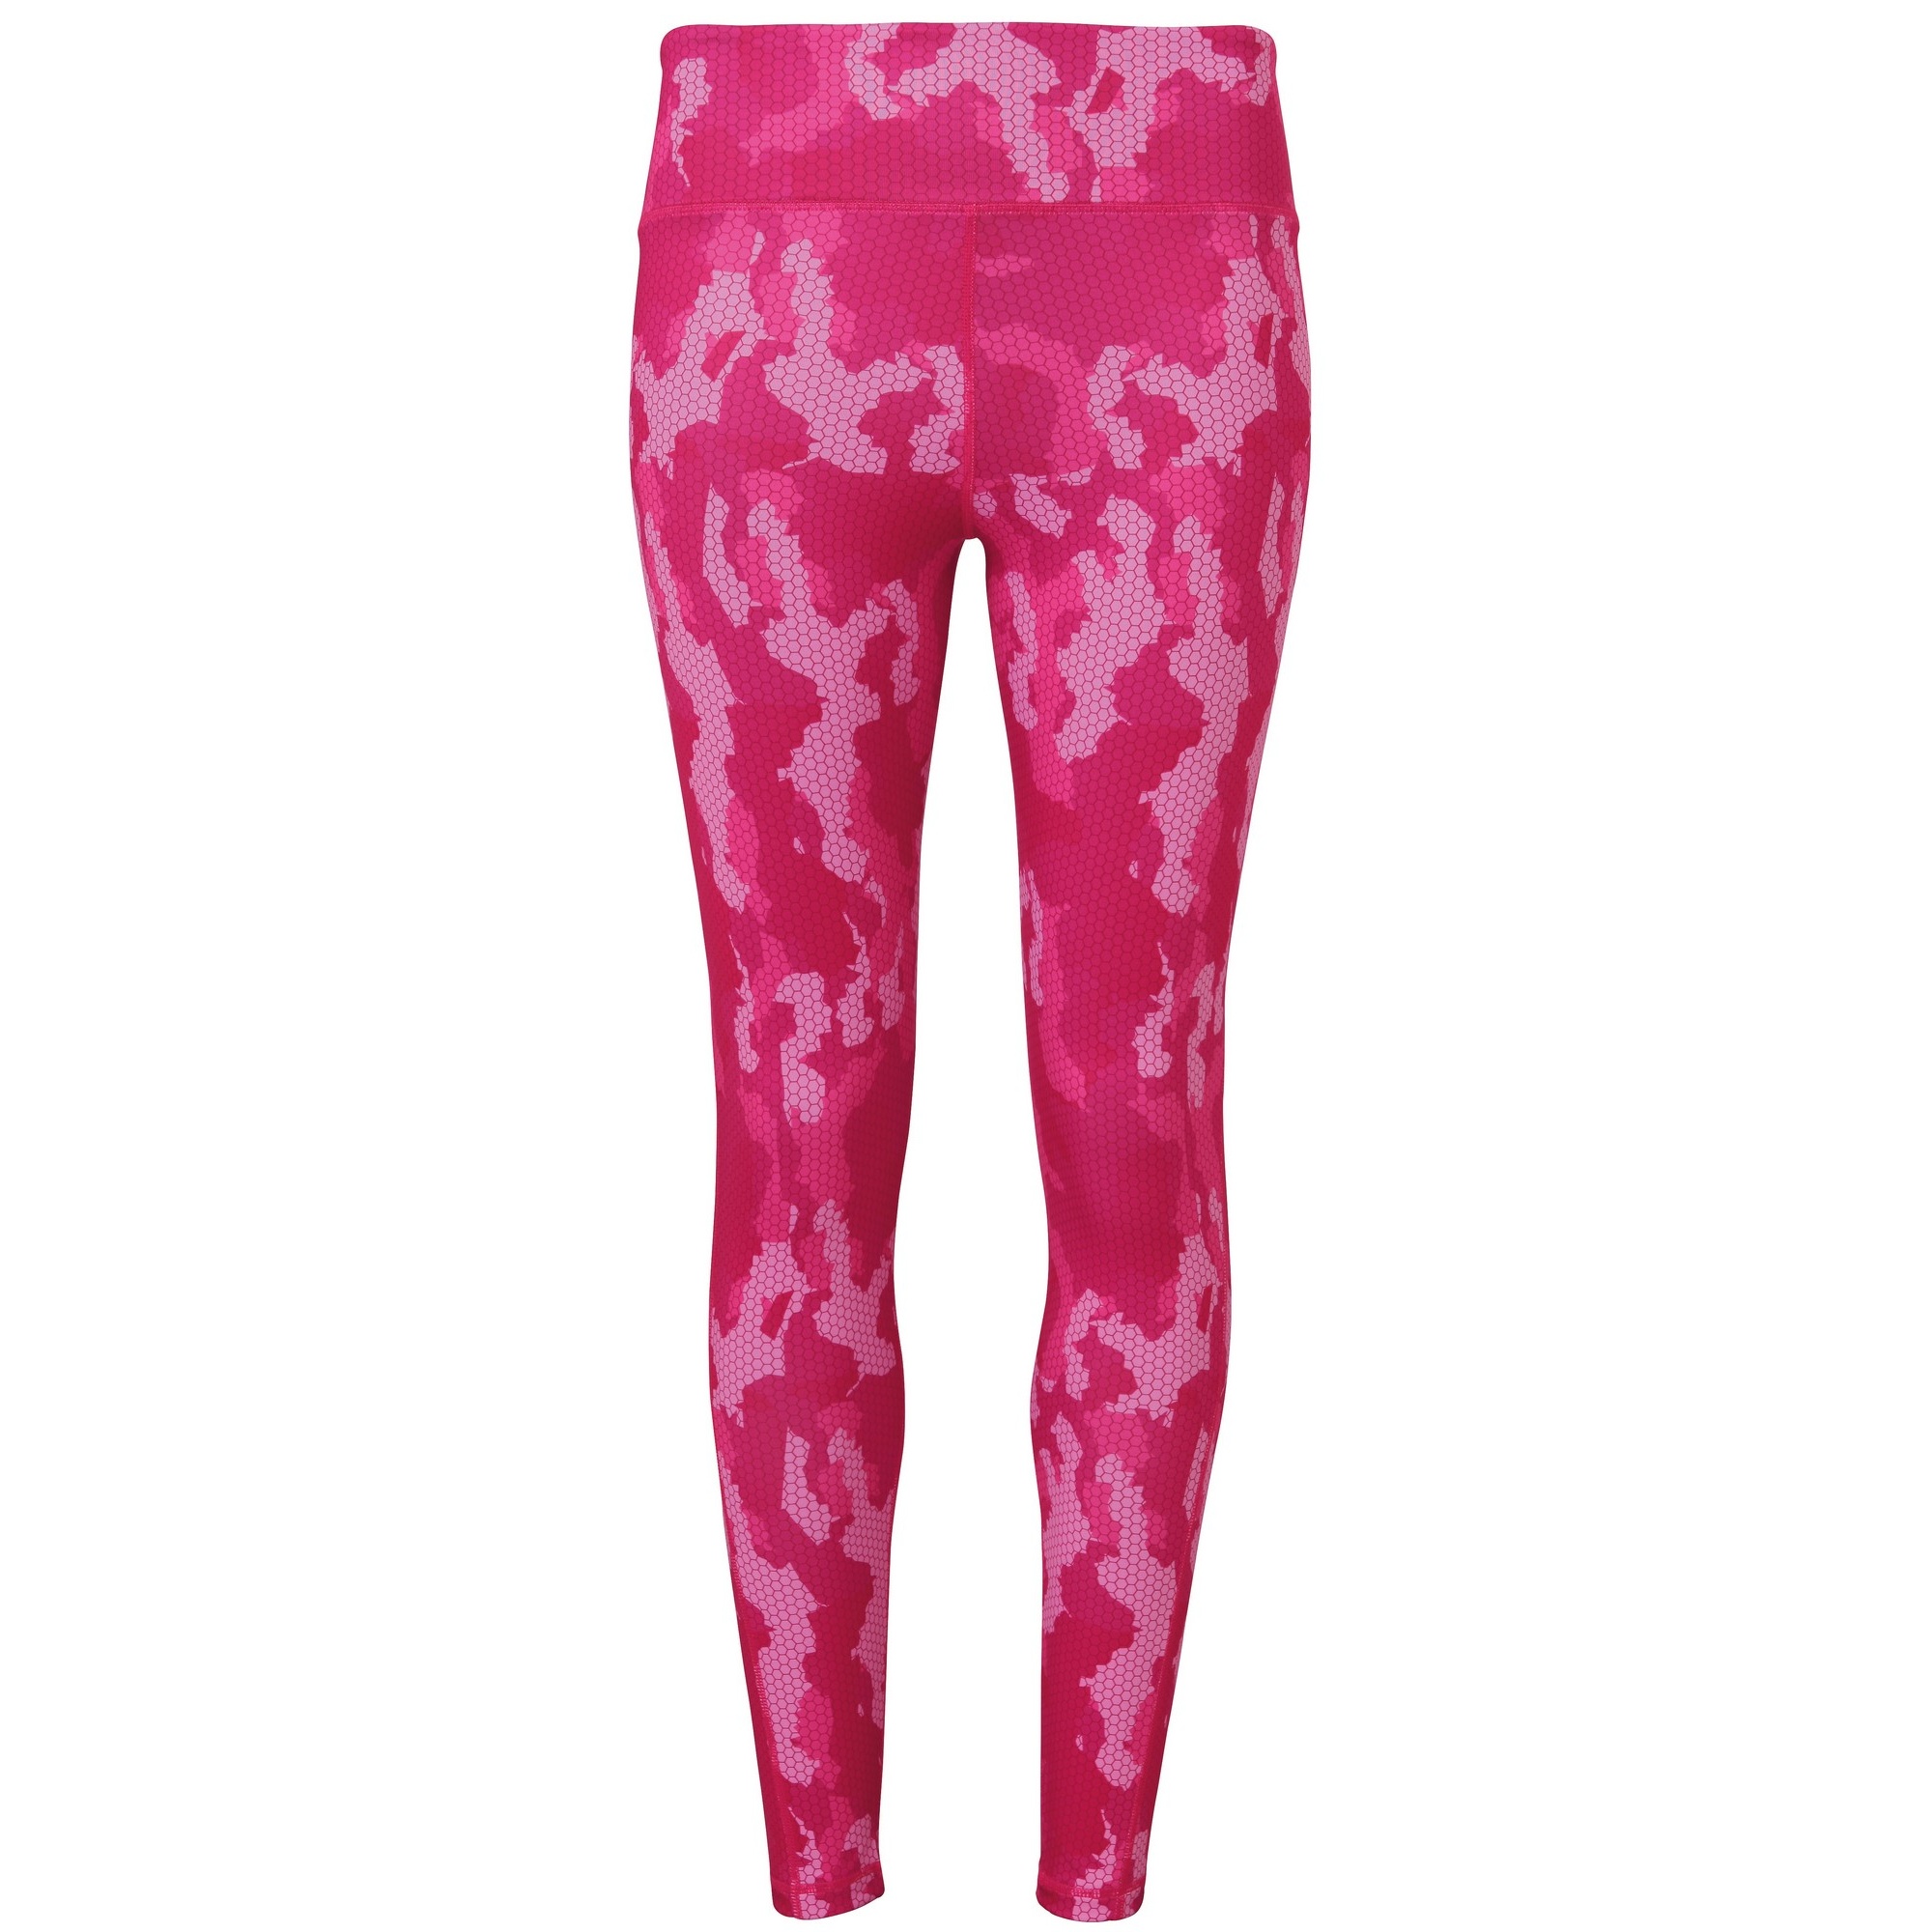 Leggings De Resistencia Tridri Hexoflage - rosa - 